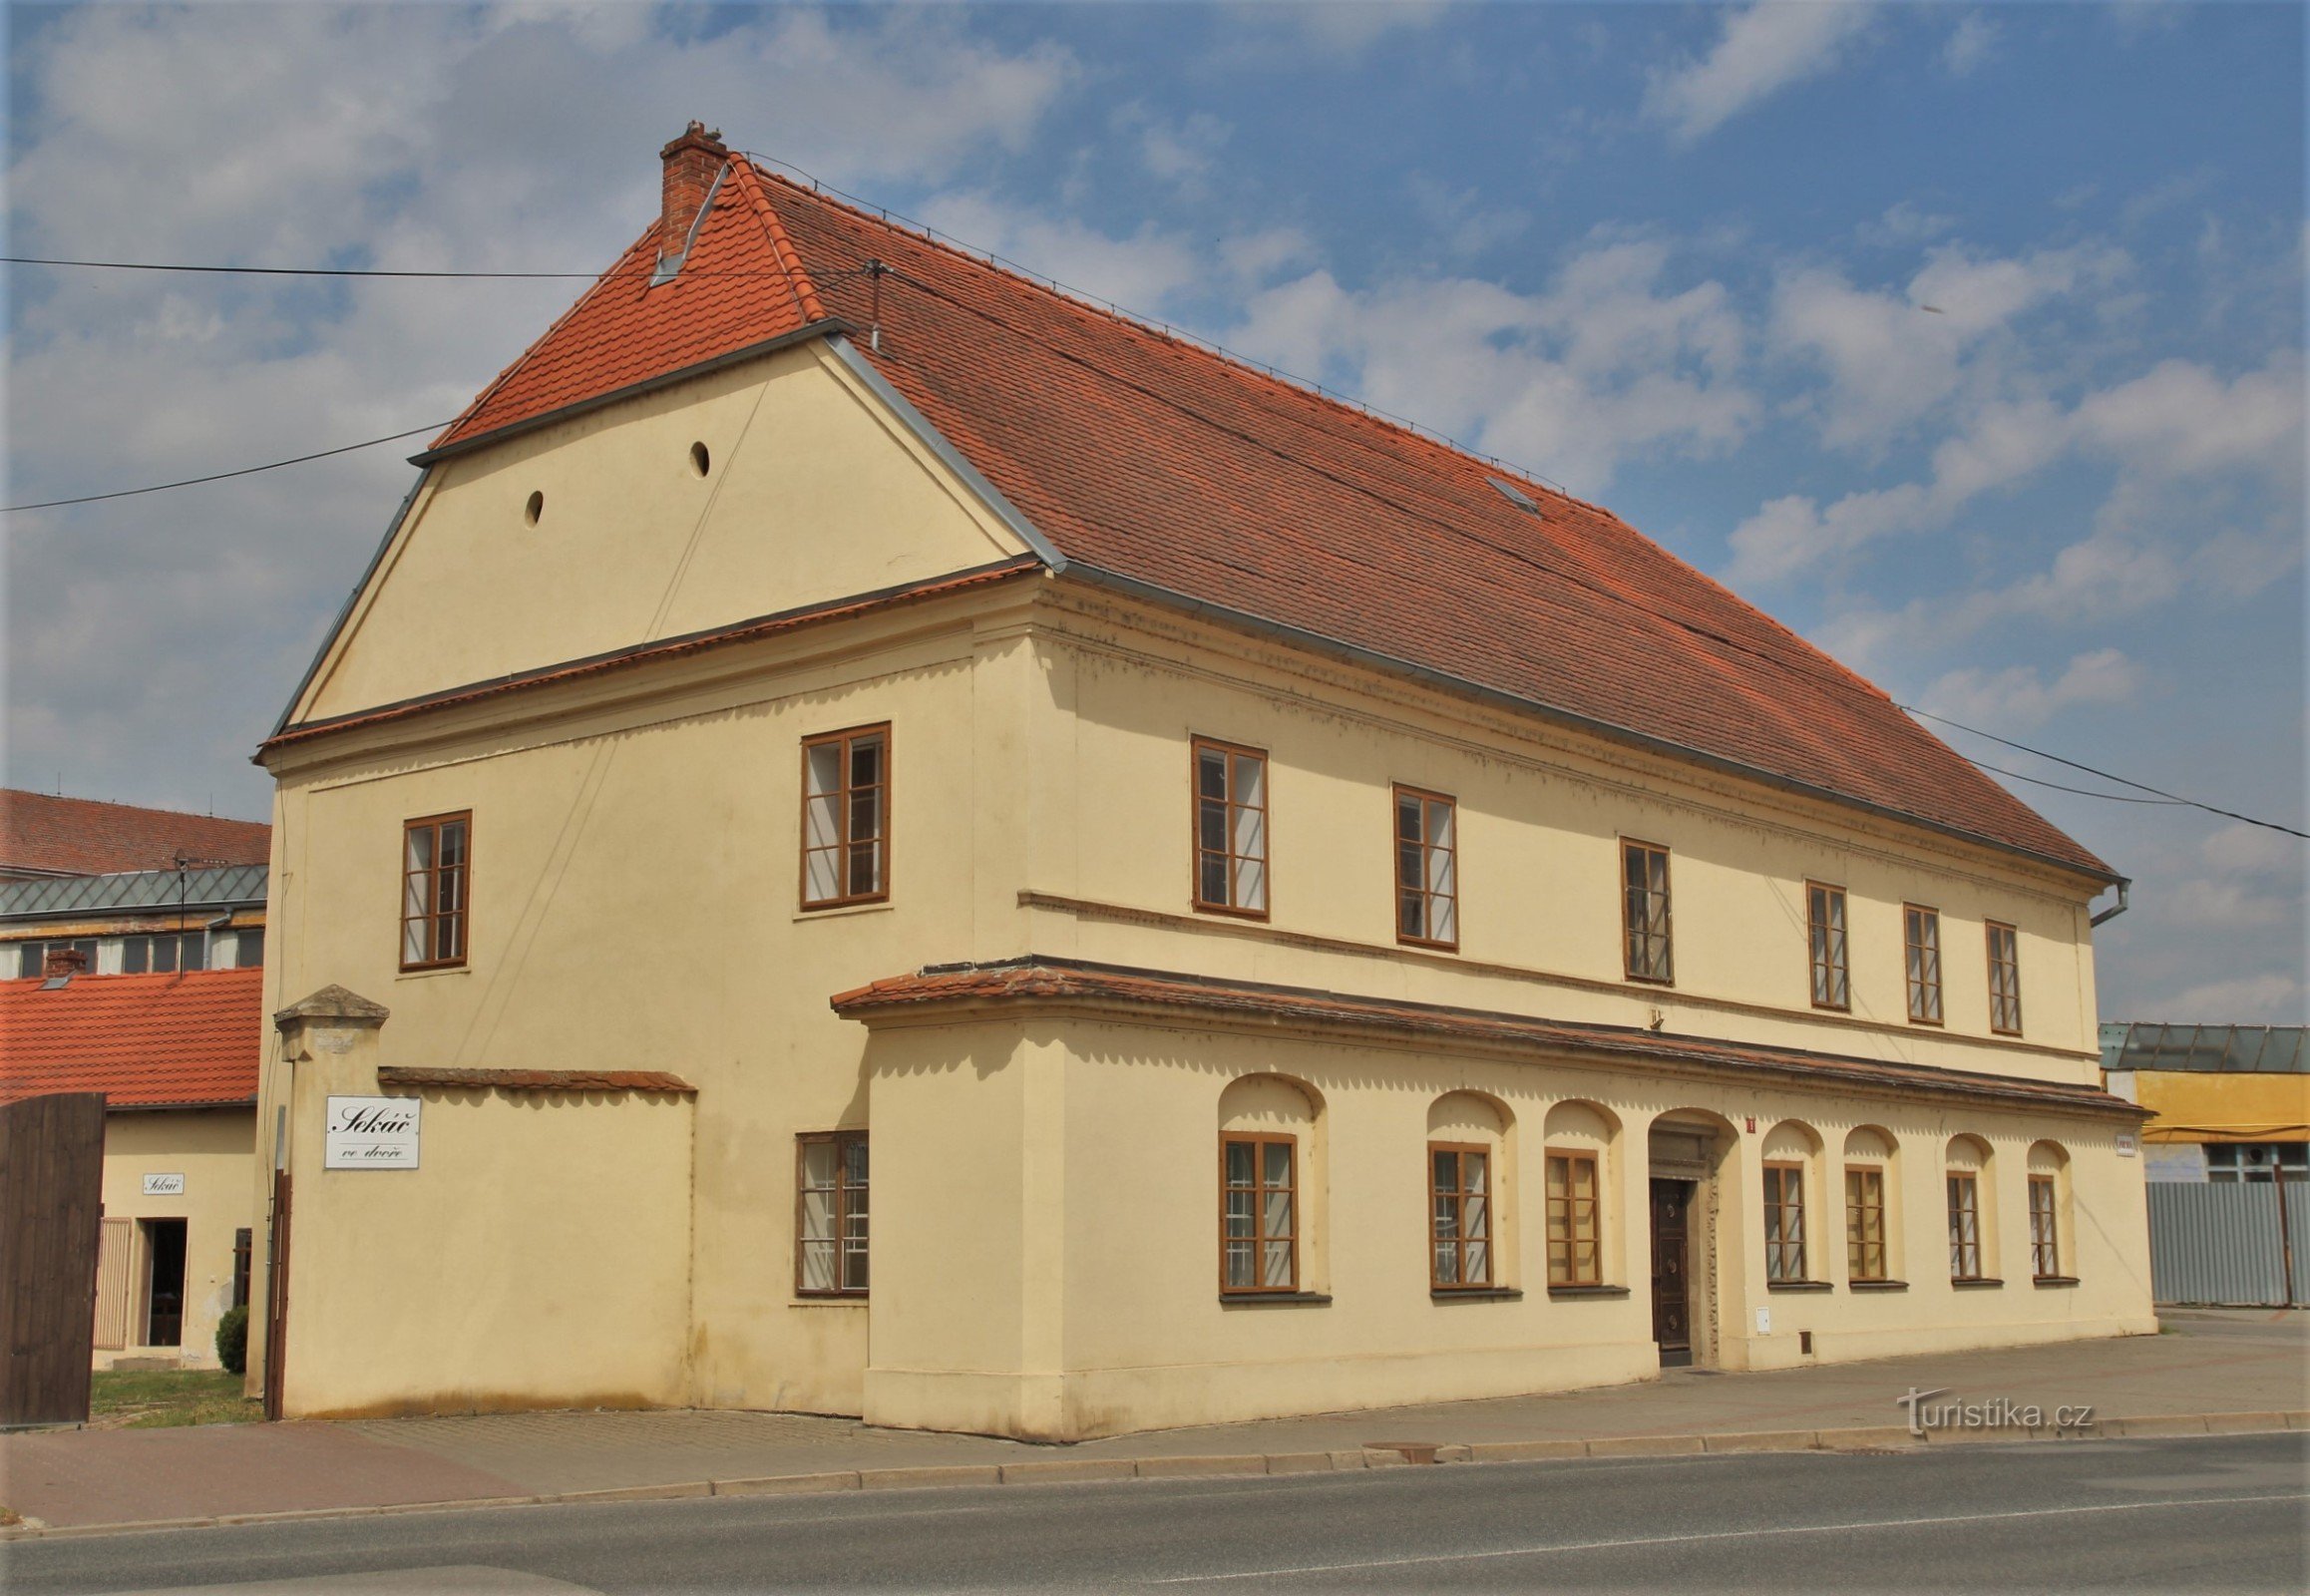 Ivančice - το σπίτι των αρχόντων του Náchod